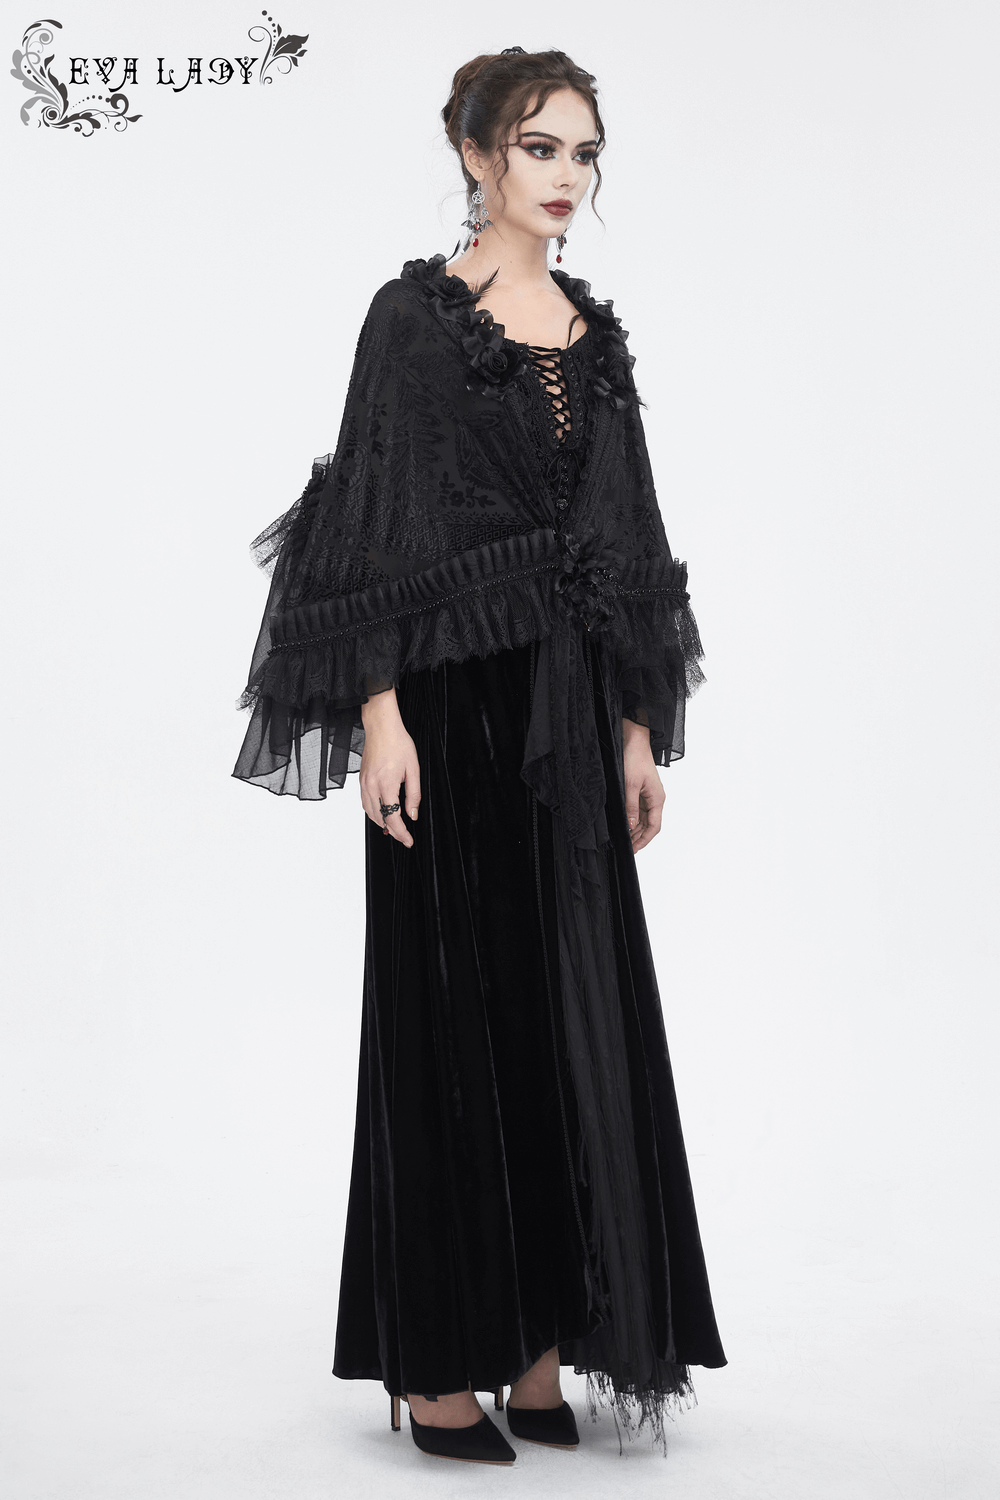 Elegant Women's Black Lace Cape with Gothic Flowers